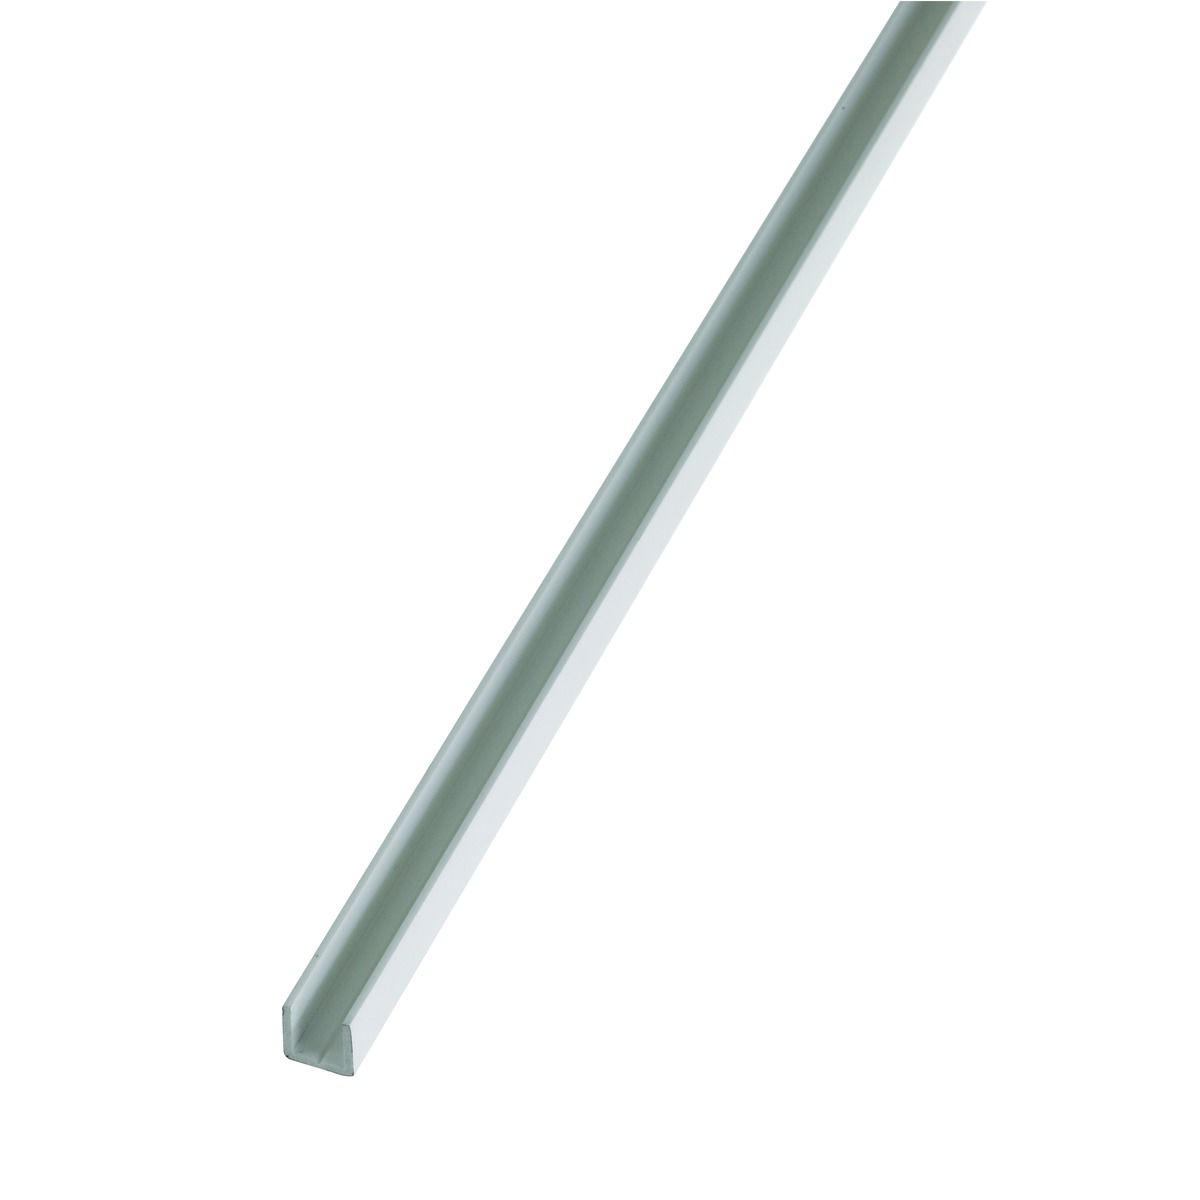 Image of Wickes 11.5mm Multi-Purpose U Section - White PVCu 1m